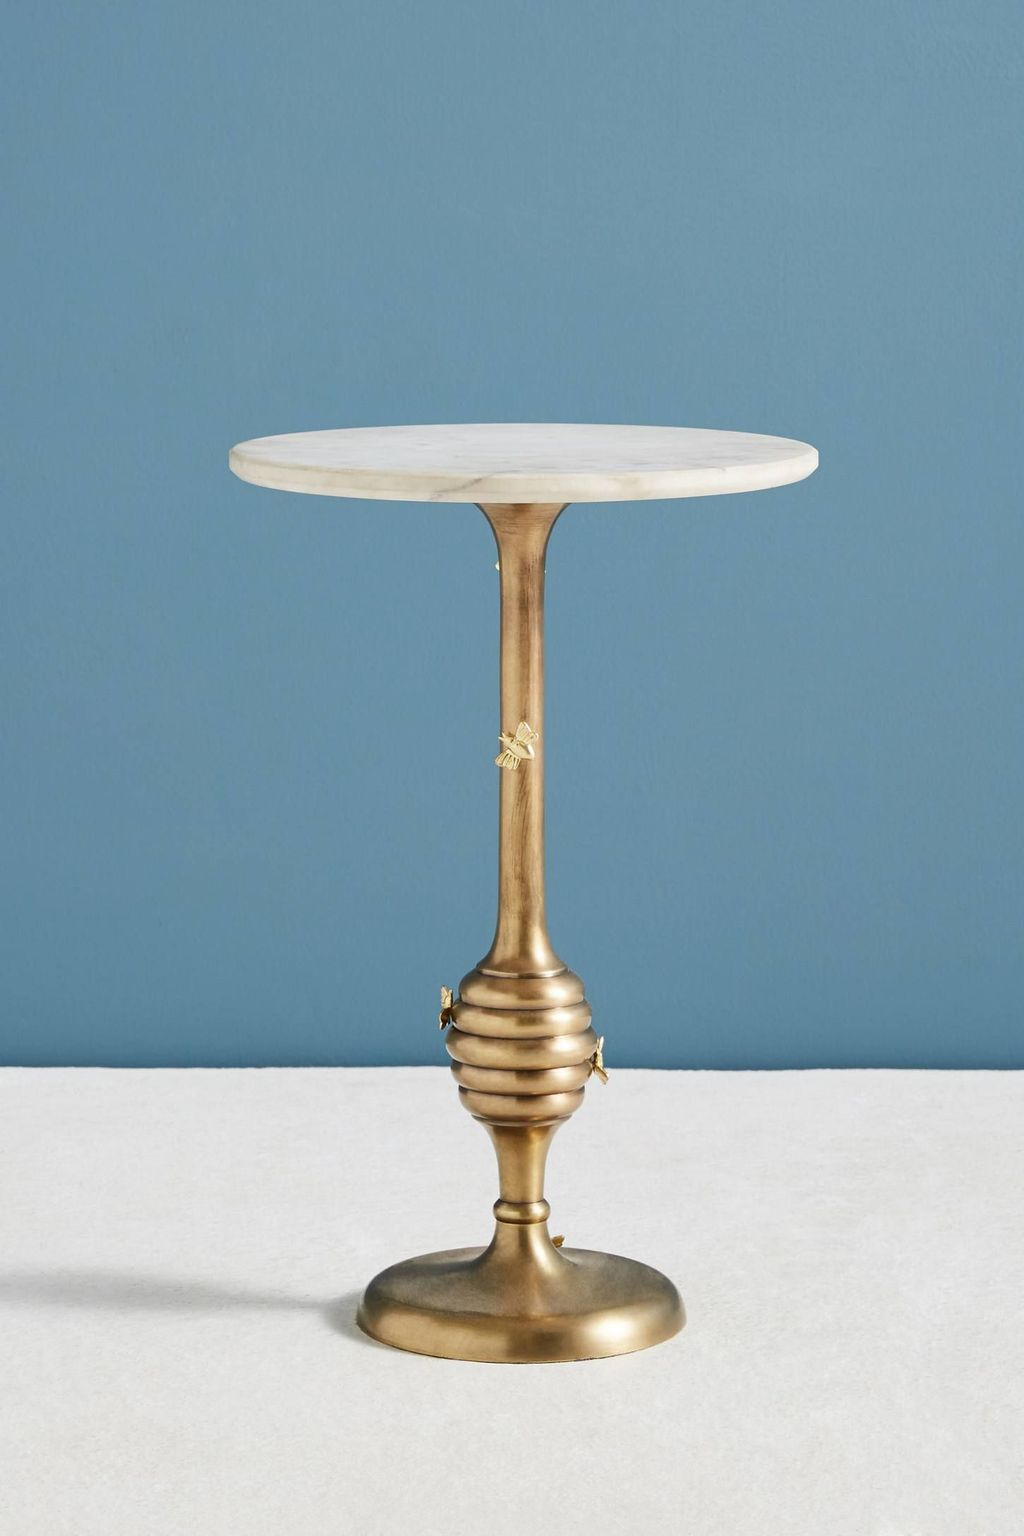 Astonishing Contemporary Bell Table Design Ideas39